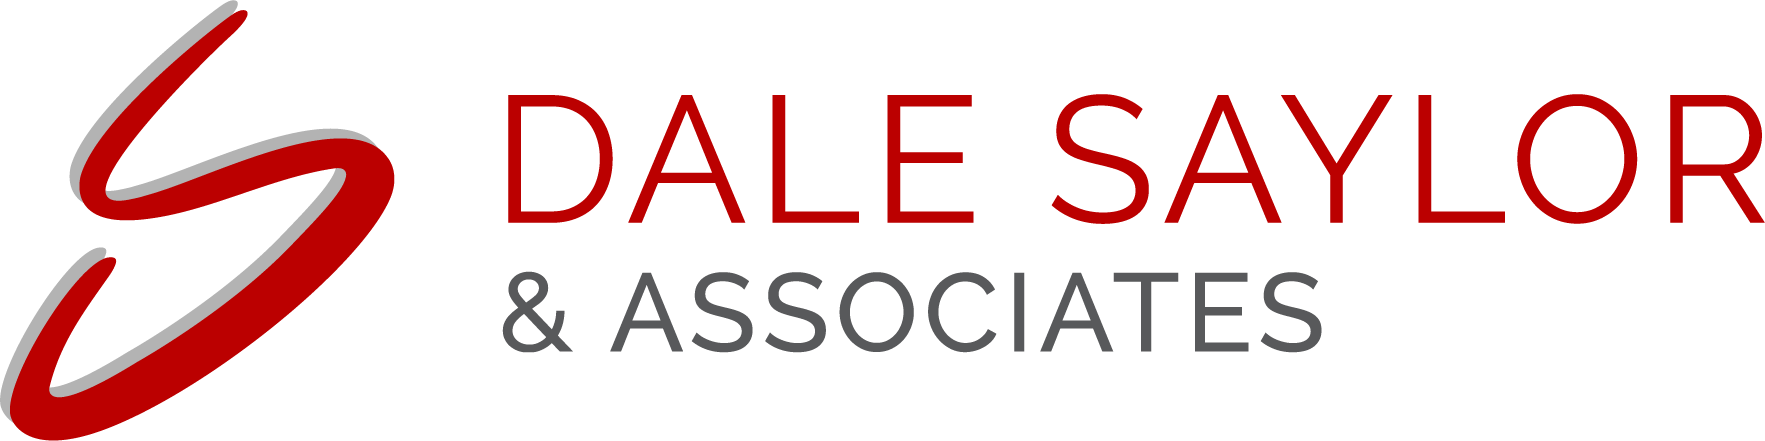 Dale Saylor & Associates Logo